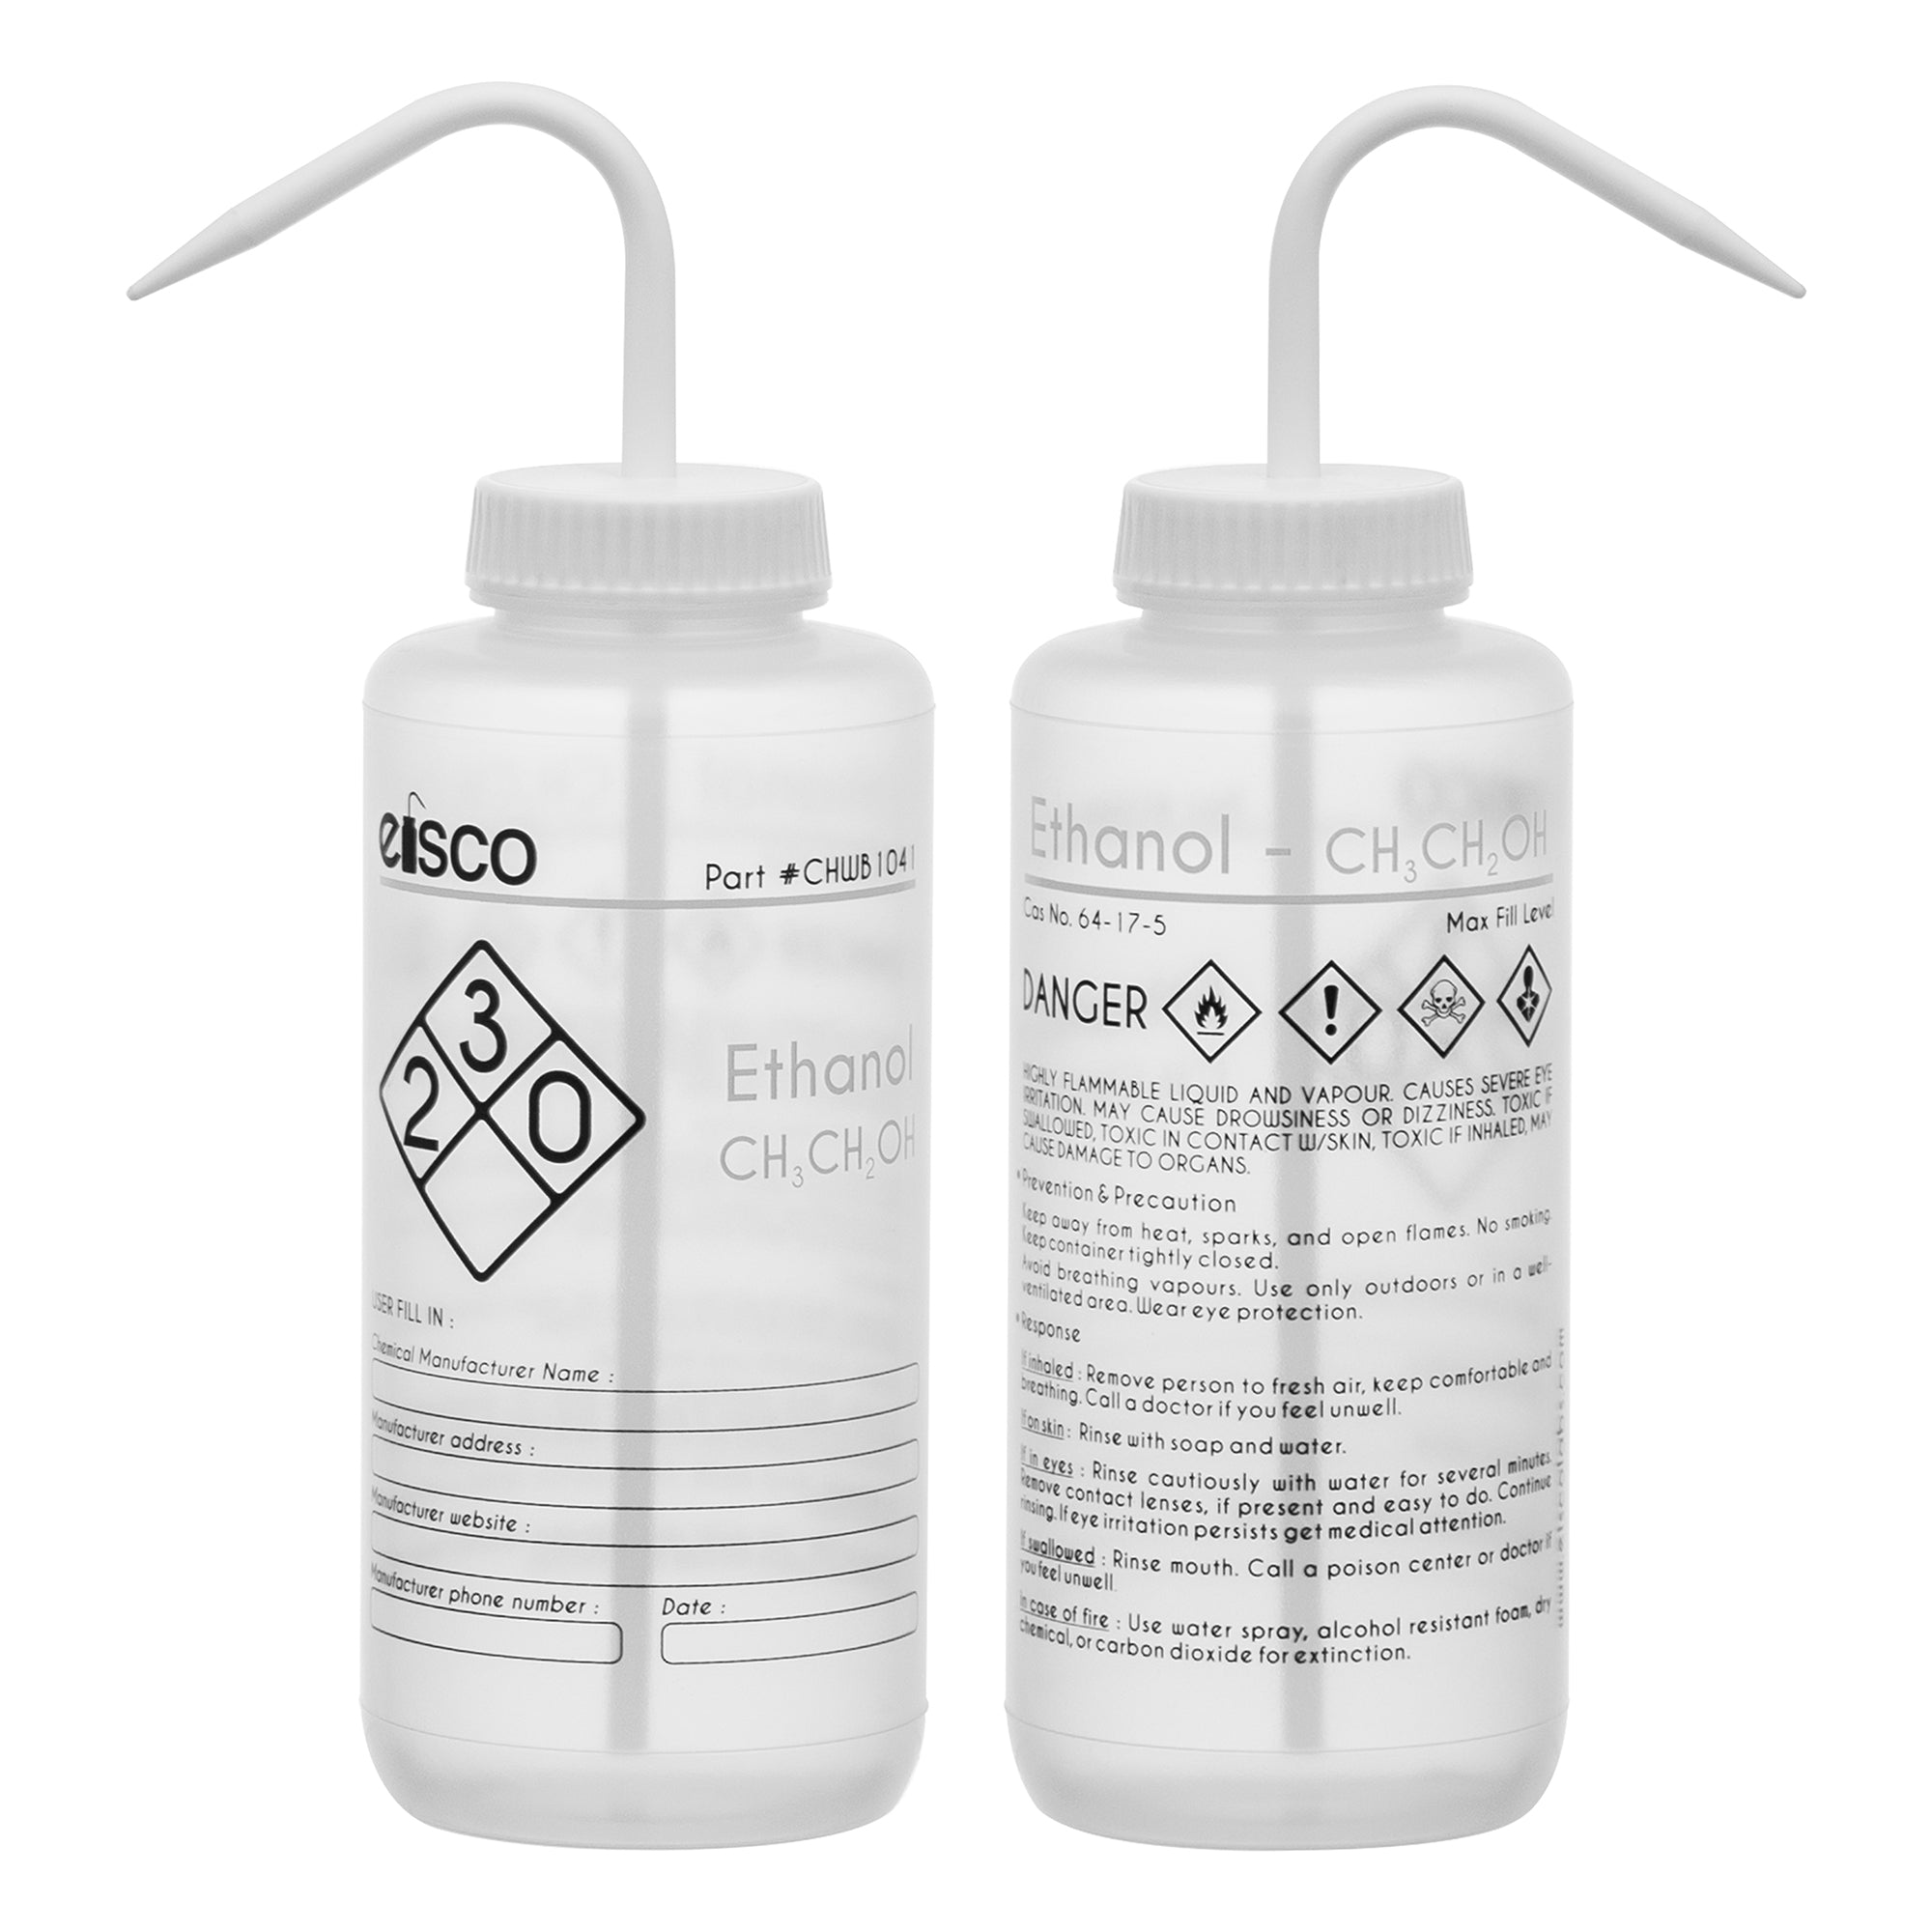 Performance Plastic Wash Bottle, Ethano, 1000 ml - Labeled (2 Color)